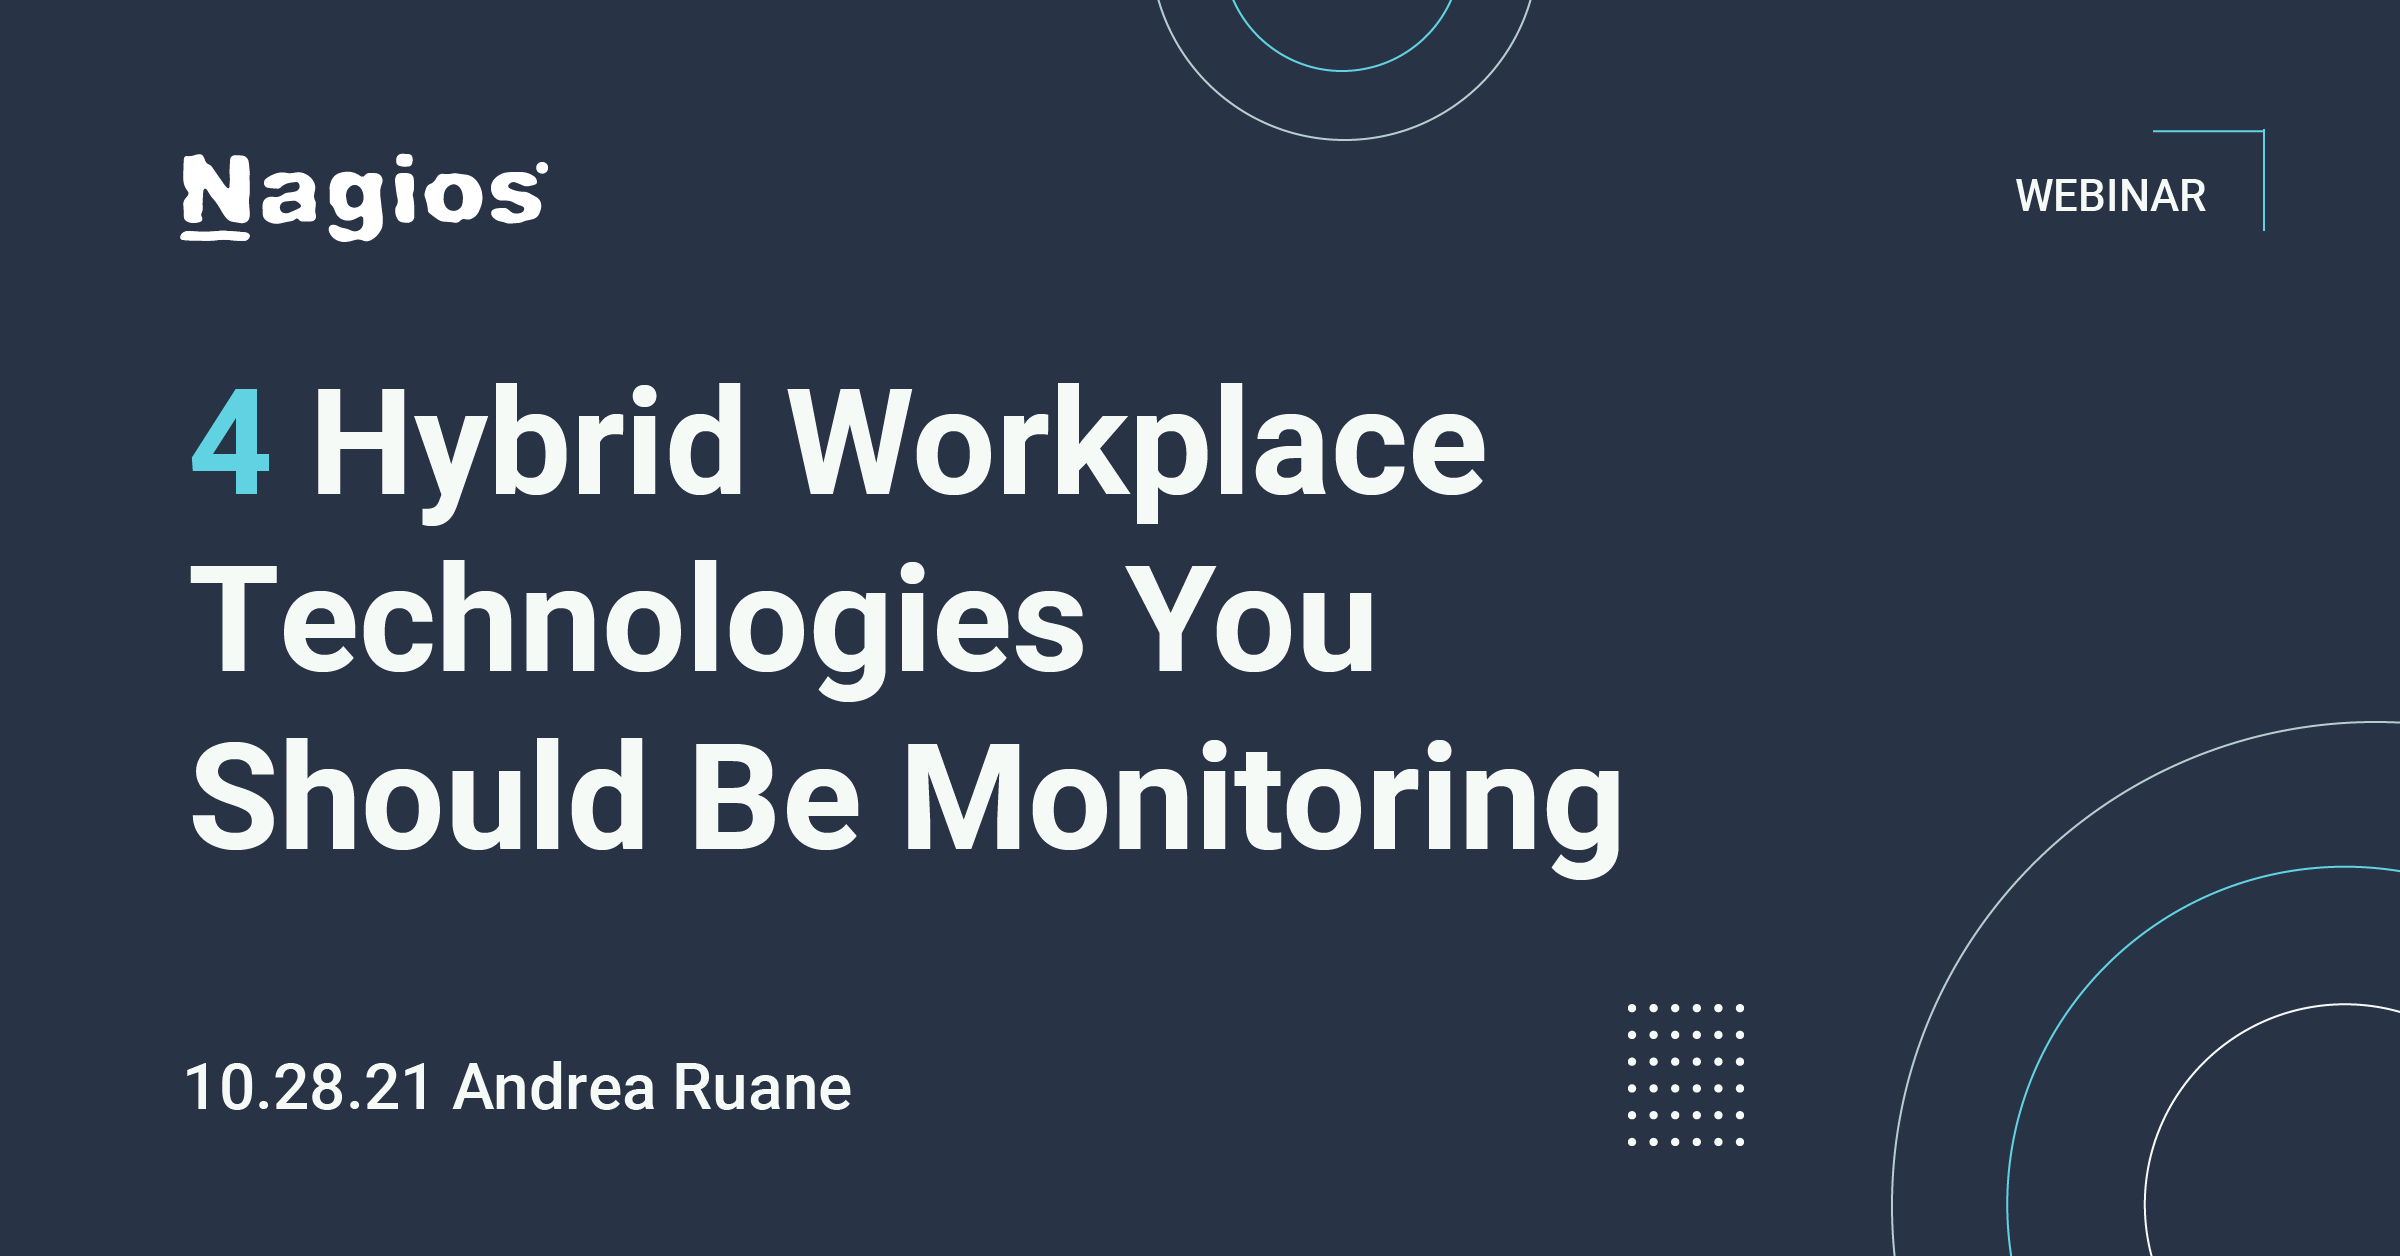 nagios webinars: 4 hybrid workplace technologies you should be monitoring